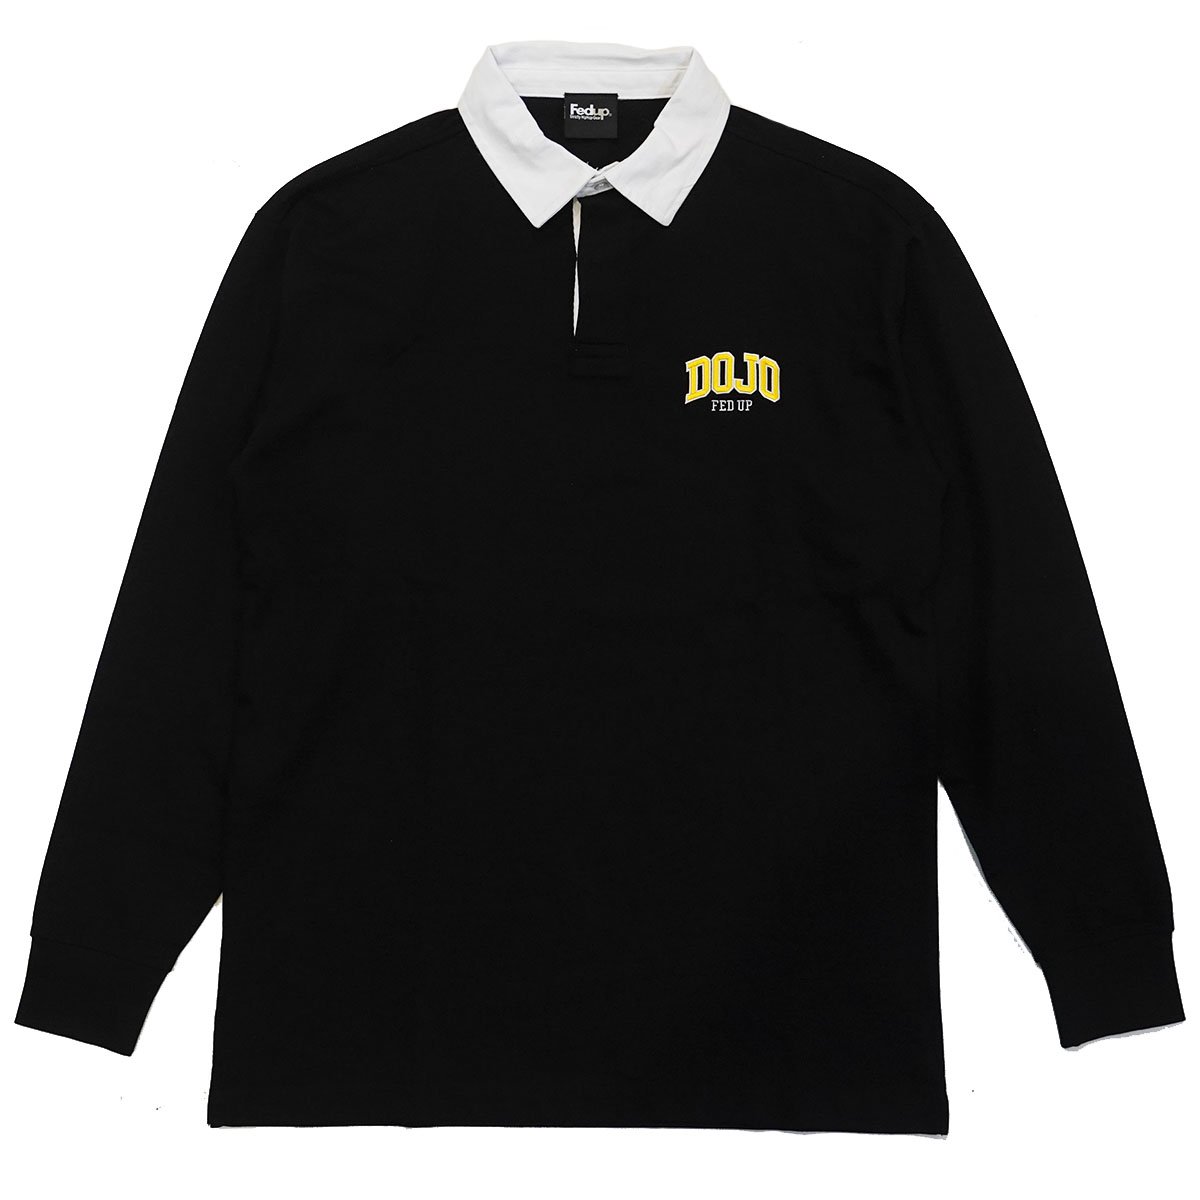 Fedup (フェドアップ) DOJO ラグビーシャツ,ラガーシャツの取り扱い店舗販売 通販-大阪 osaka HipHop